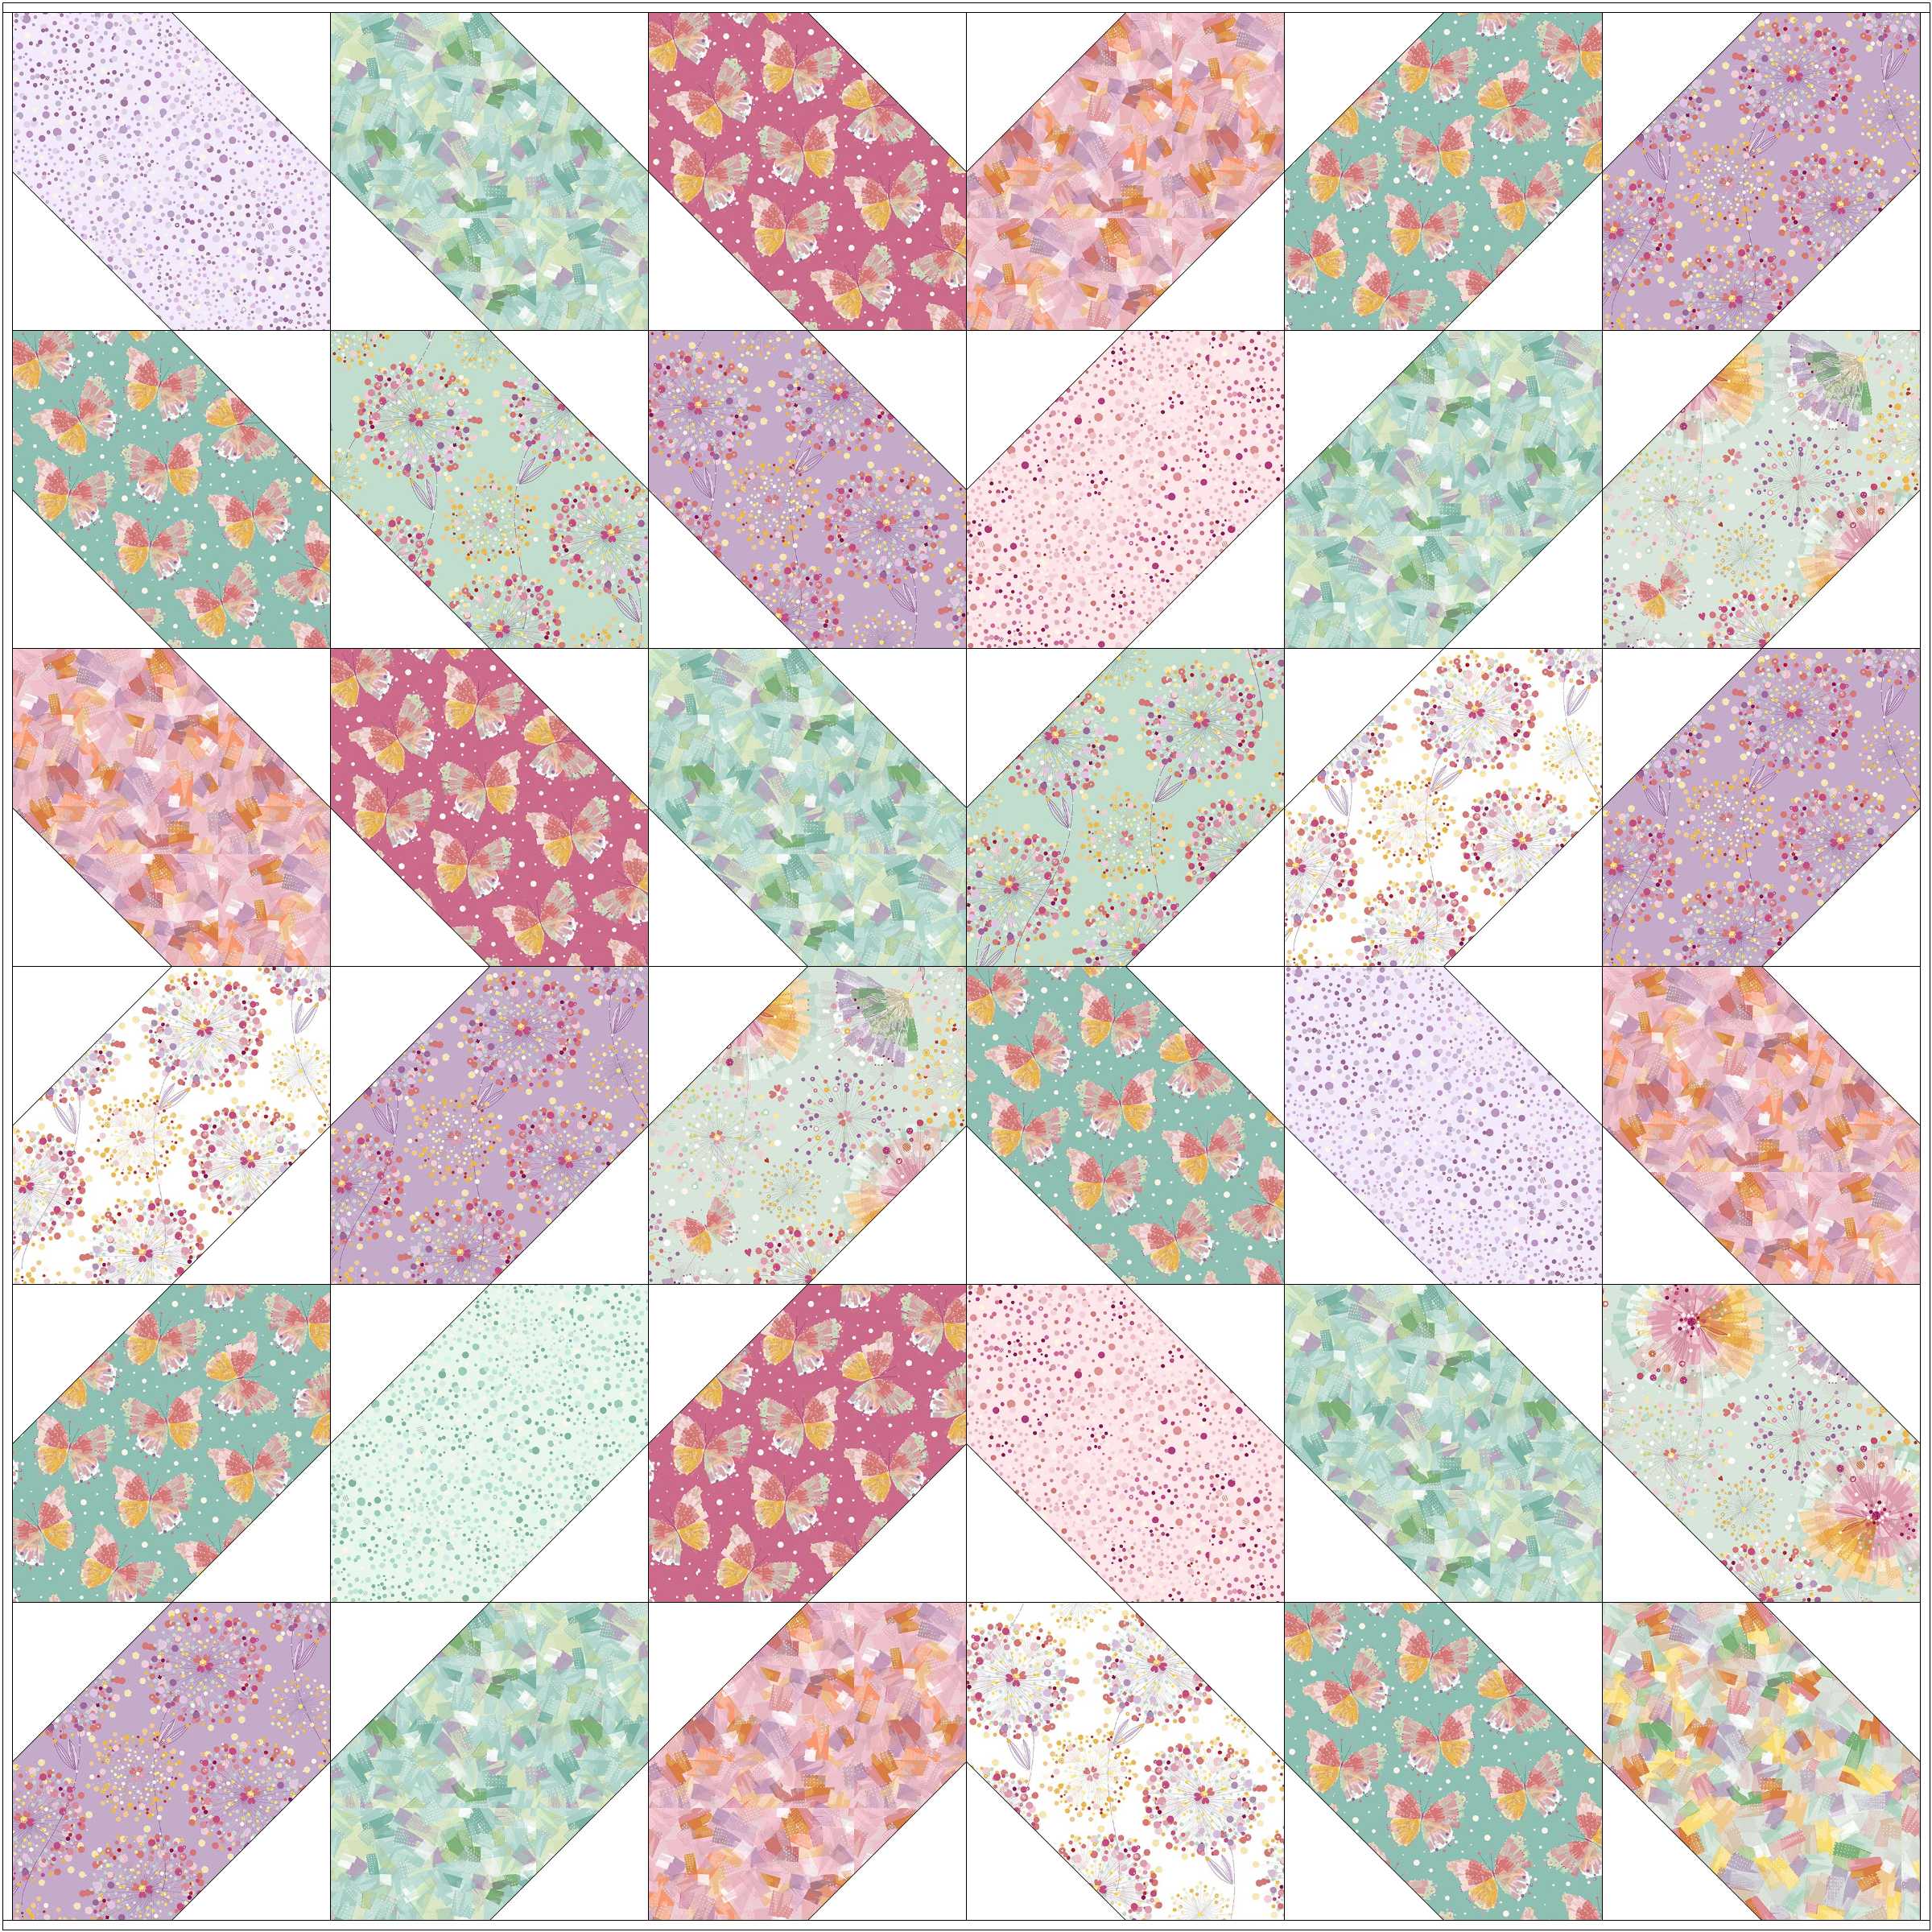 5 Fat Quarter Quilt Patterns Free Quilt Pattern - vrogue.co